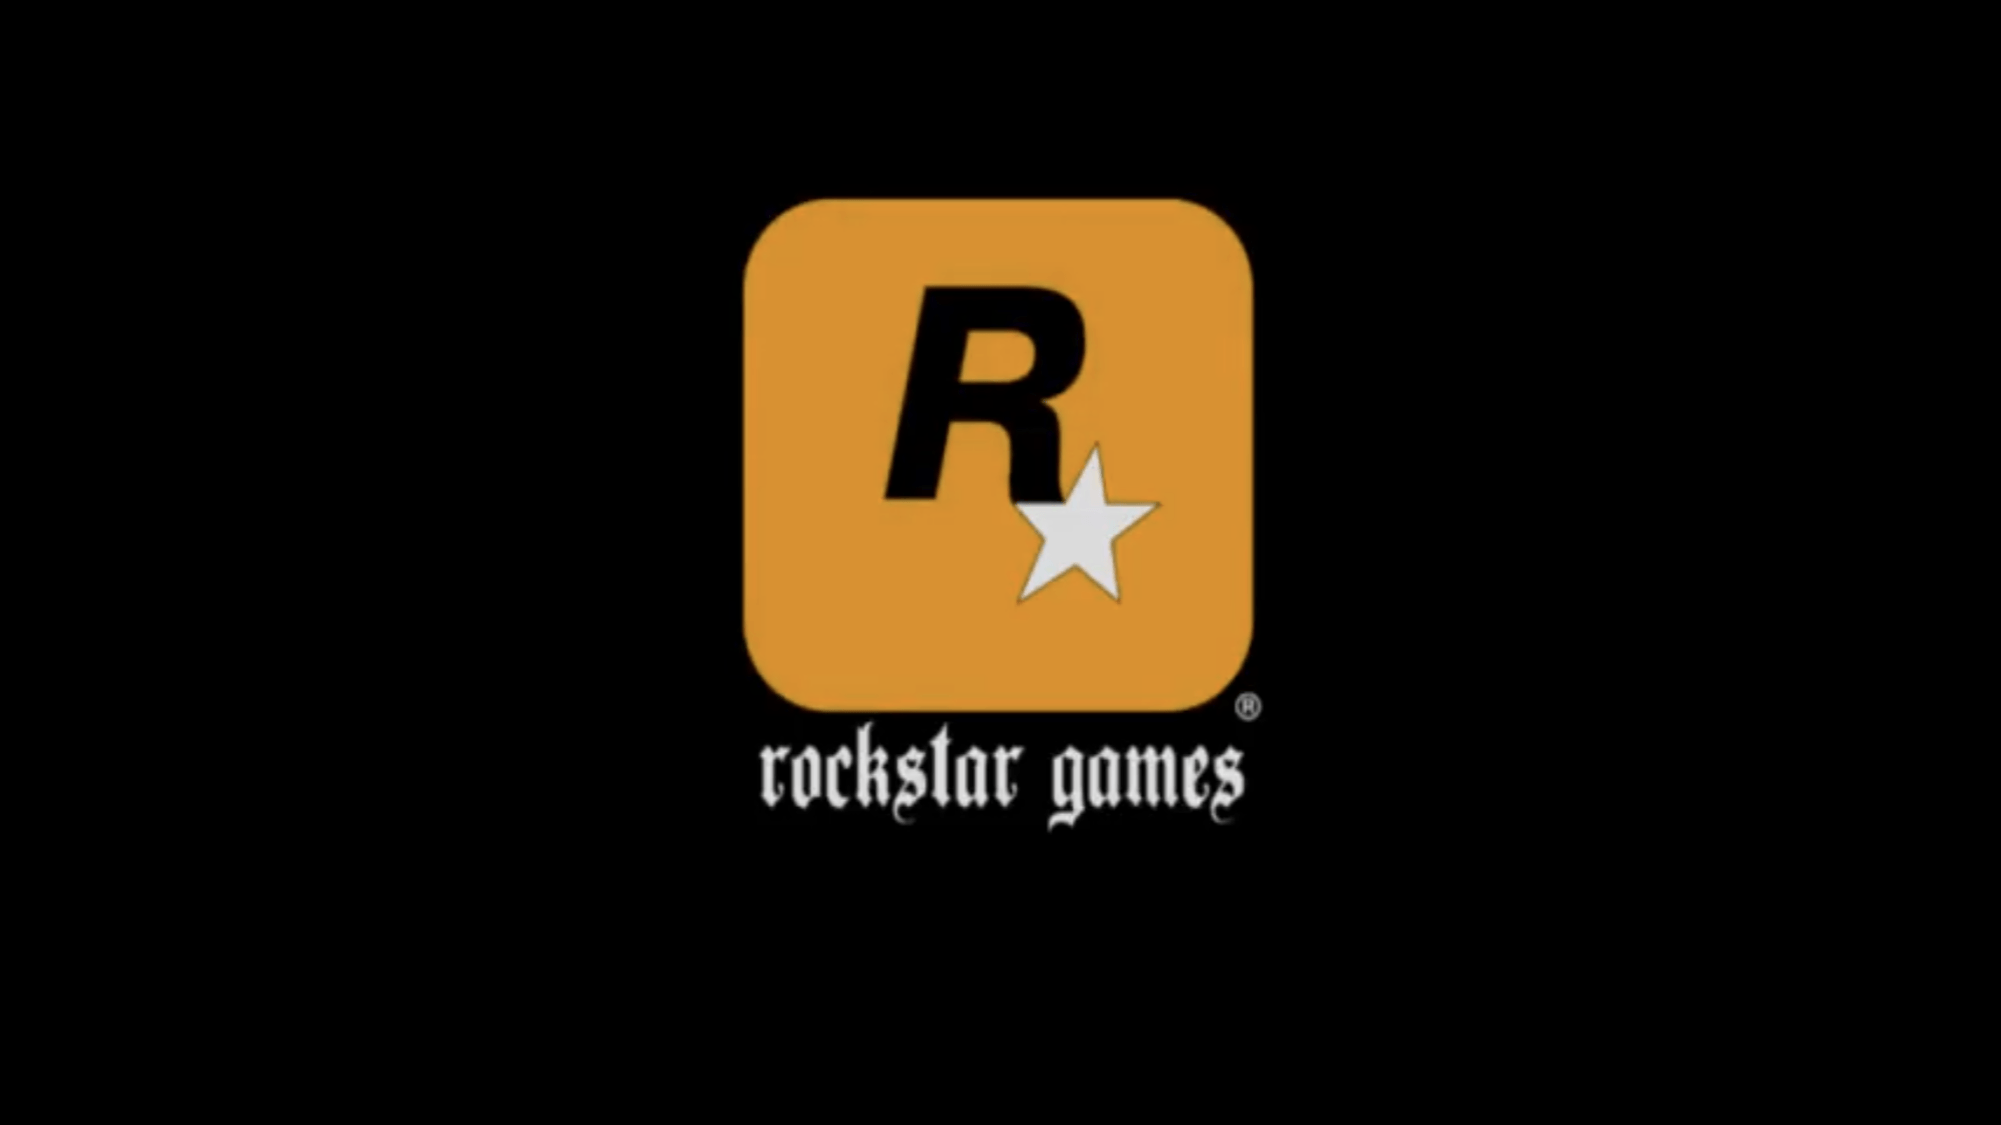 Rockstar games logo (GTA san andreas). Rockstar games logo